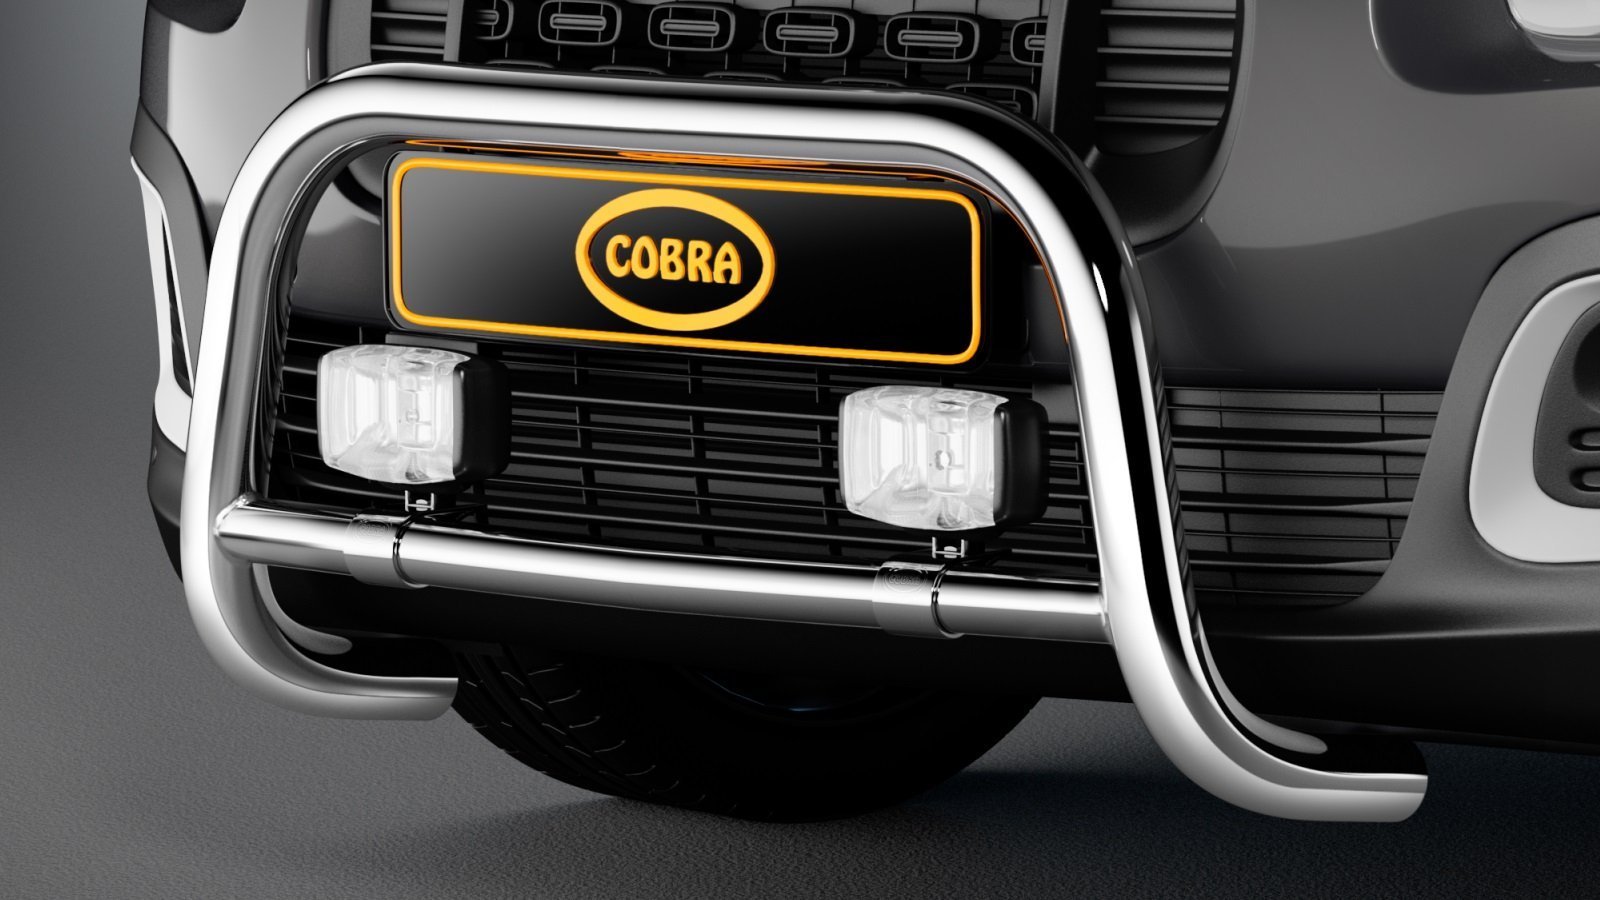 Opel Combo EU Frontbåge (Cobra)